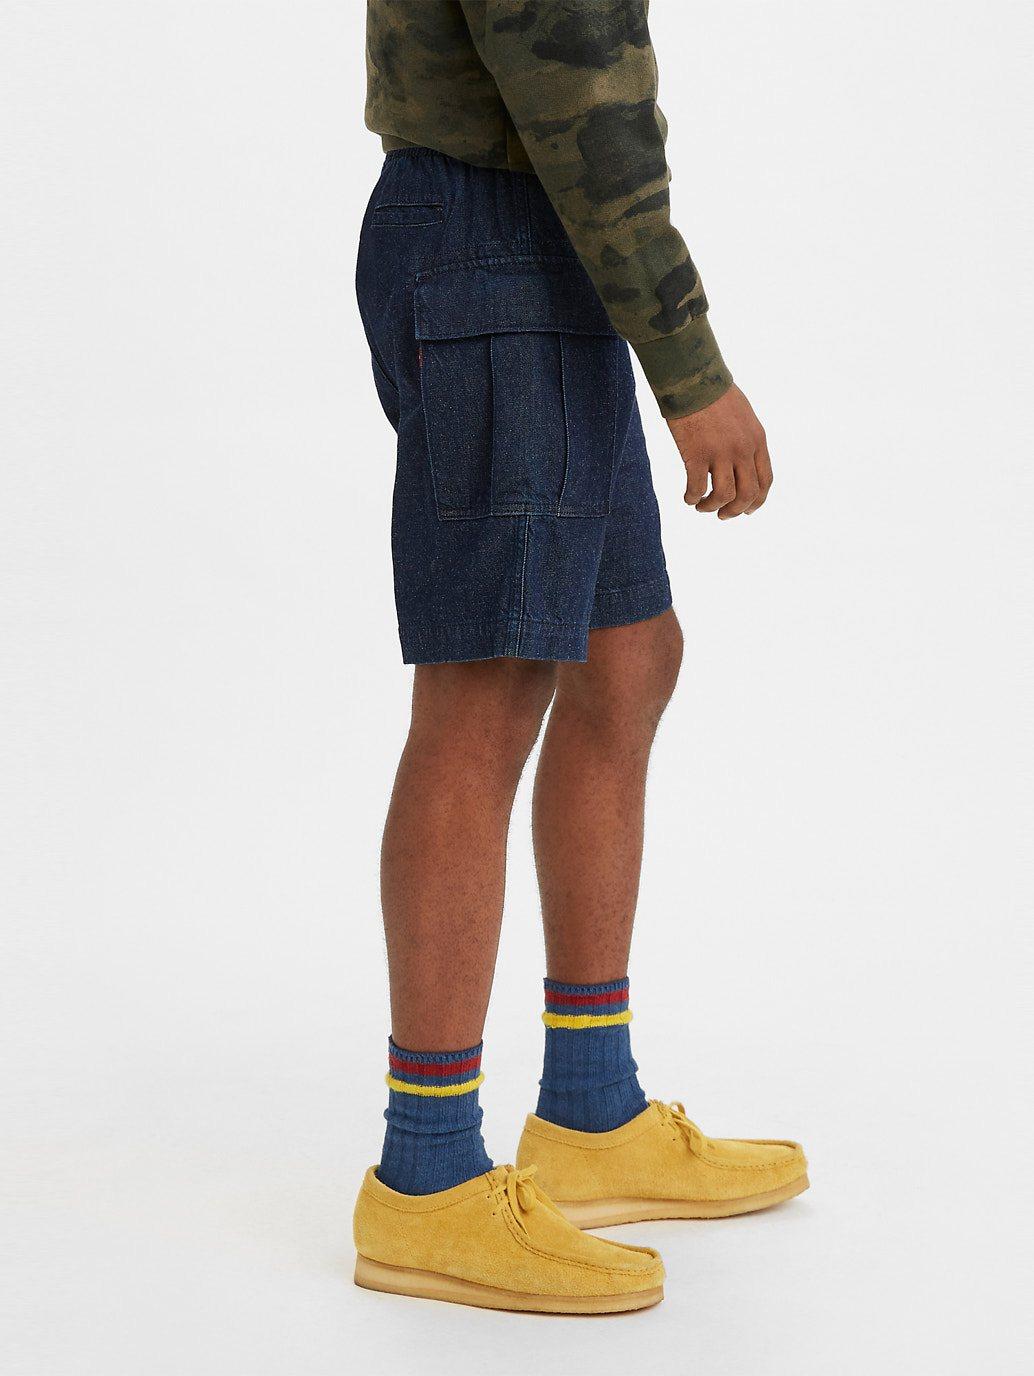 Sociaal schermutseling Oplossen Buy Levi's® Men's Cargo Jean Shorts | Levi's® Official Online Store MY